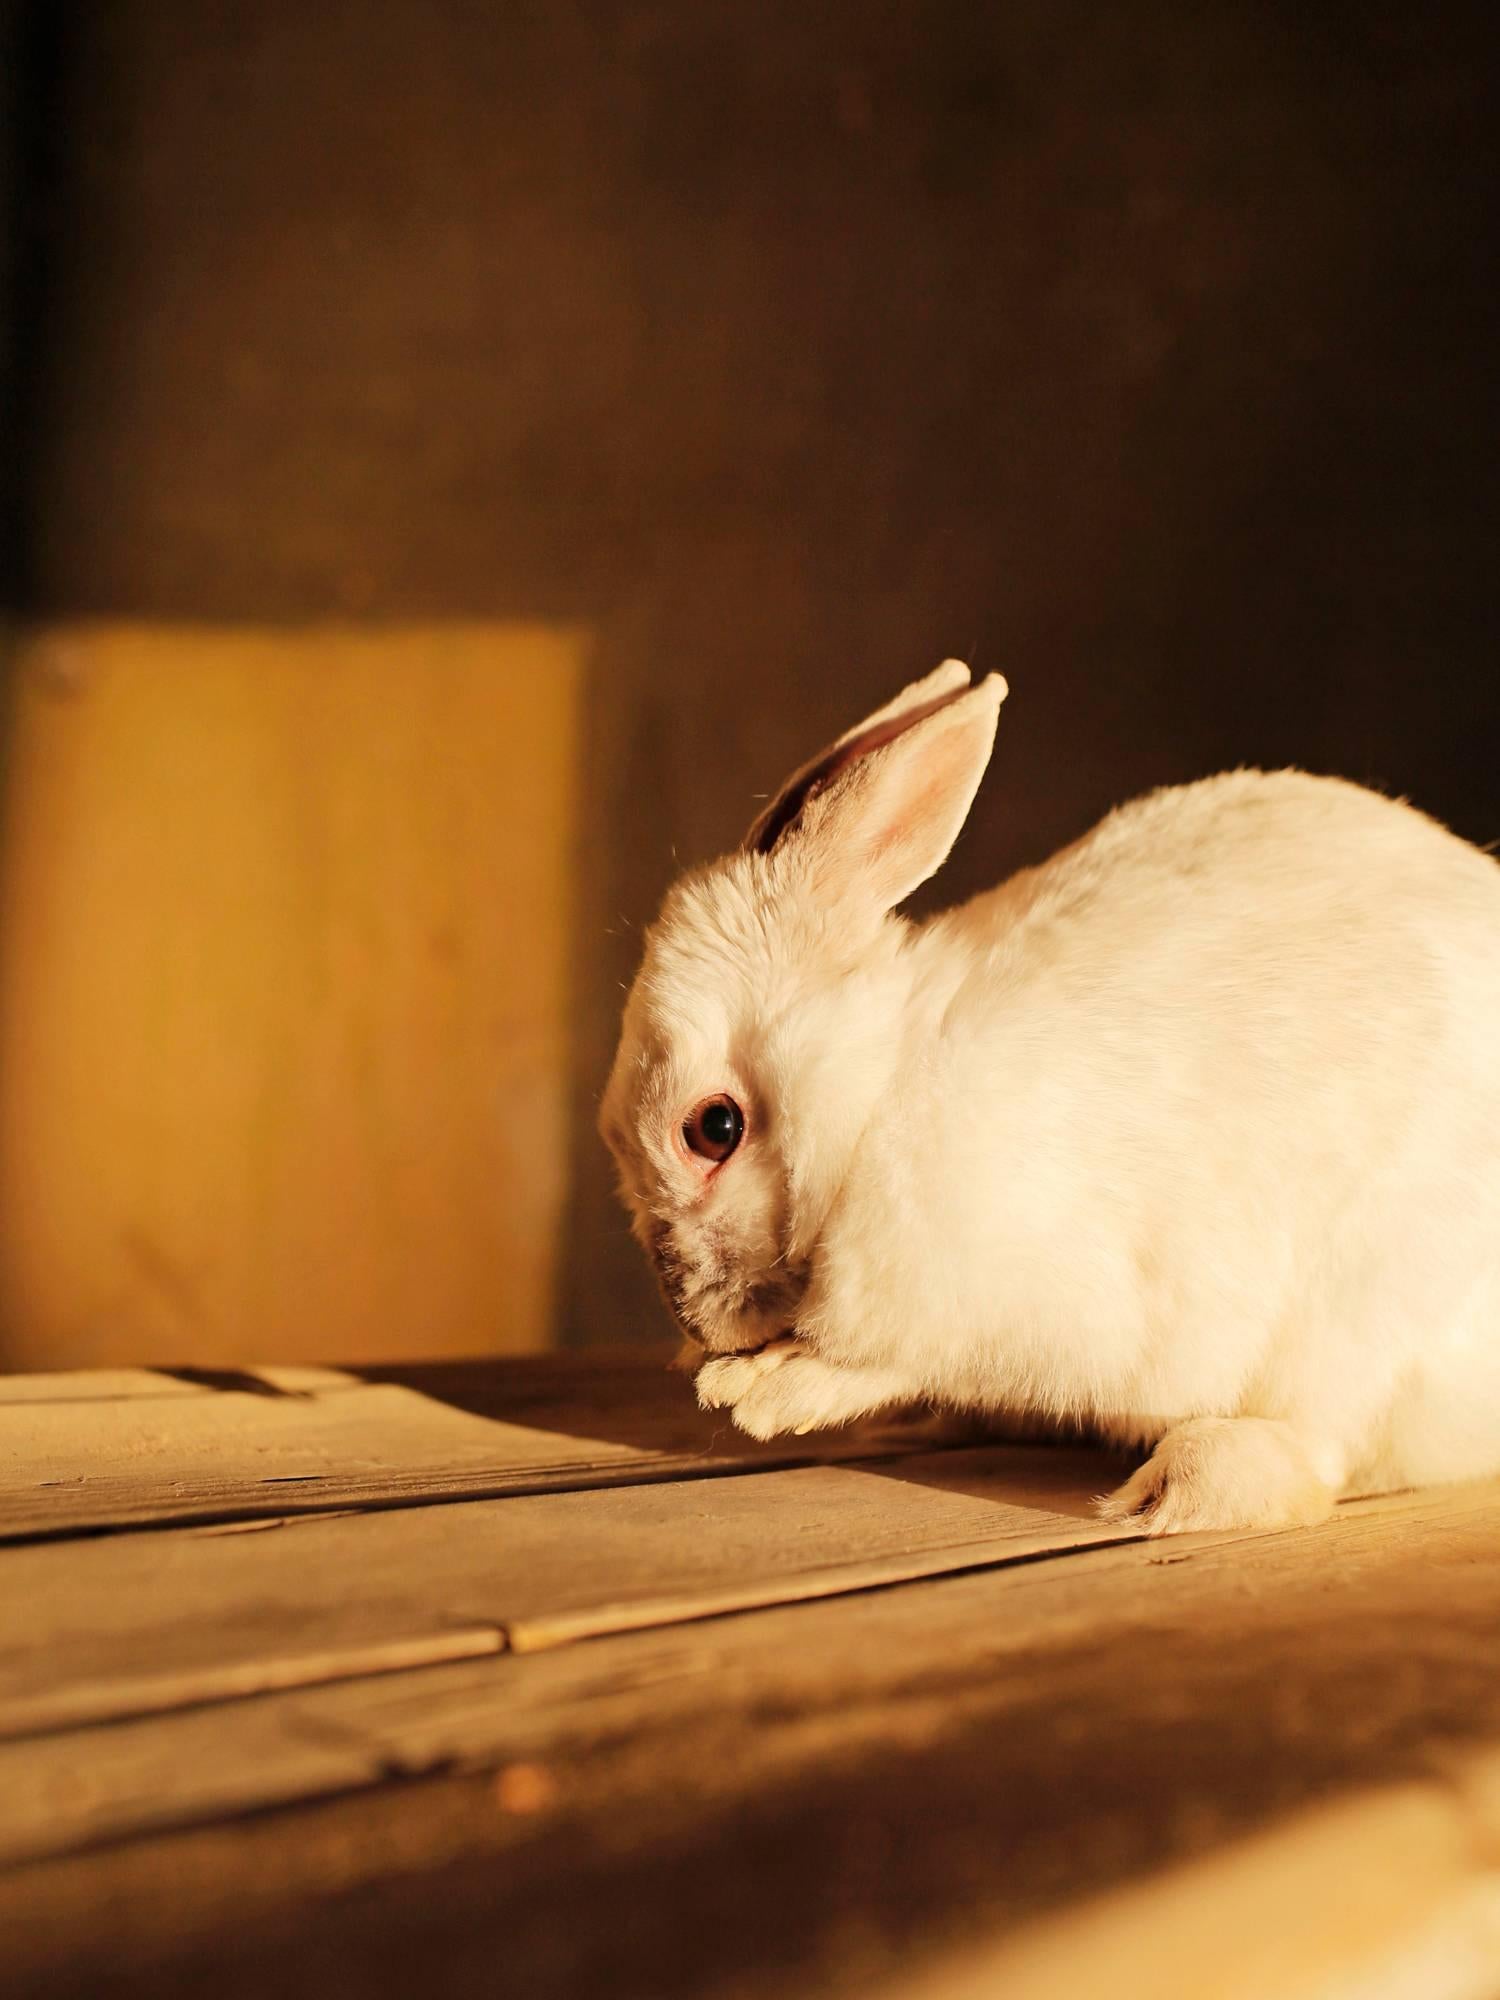 Stratis Vogiatzis Portrait Photograph - Kampor Project #6 (Rabbit in Sunlight)